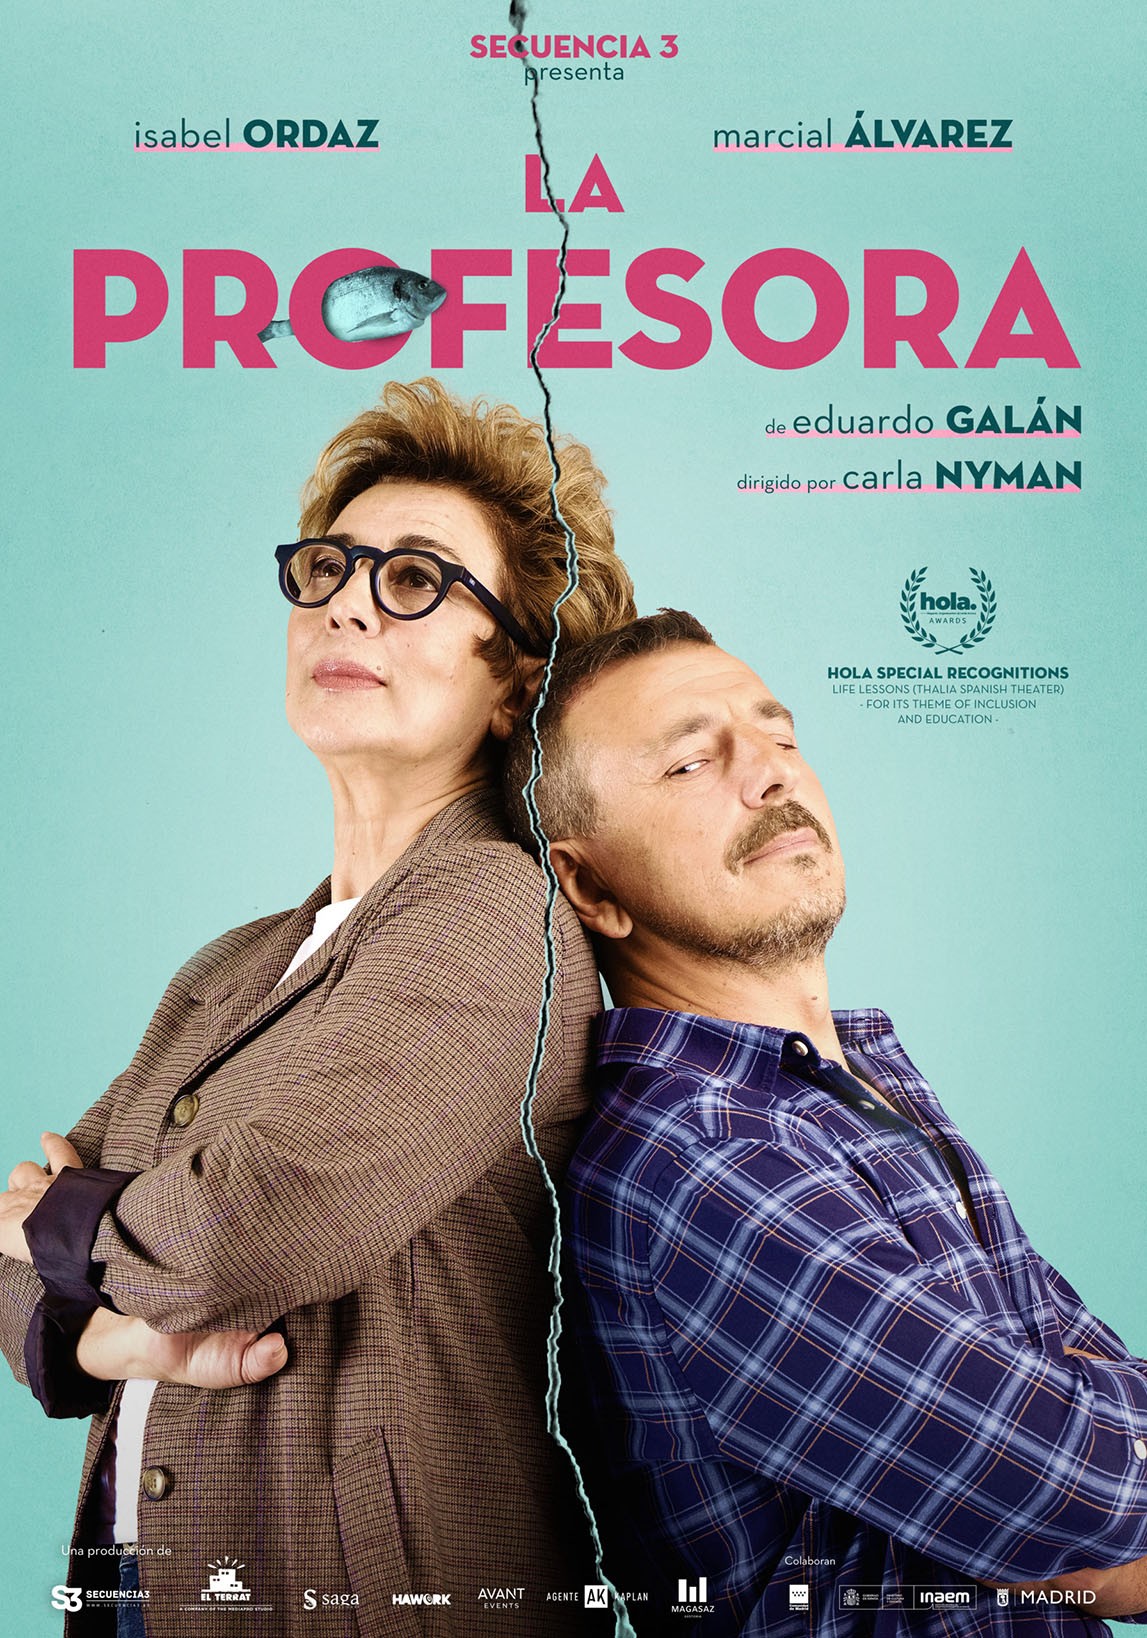 Isabel Ordaz y Marcial Álvarez protagonizan “LA PROFESORA”